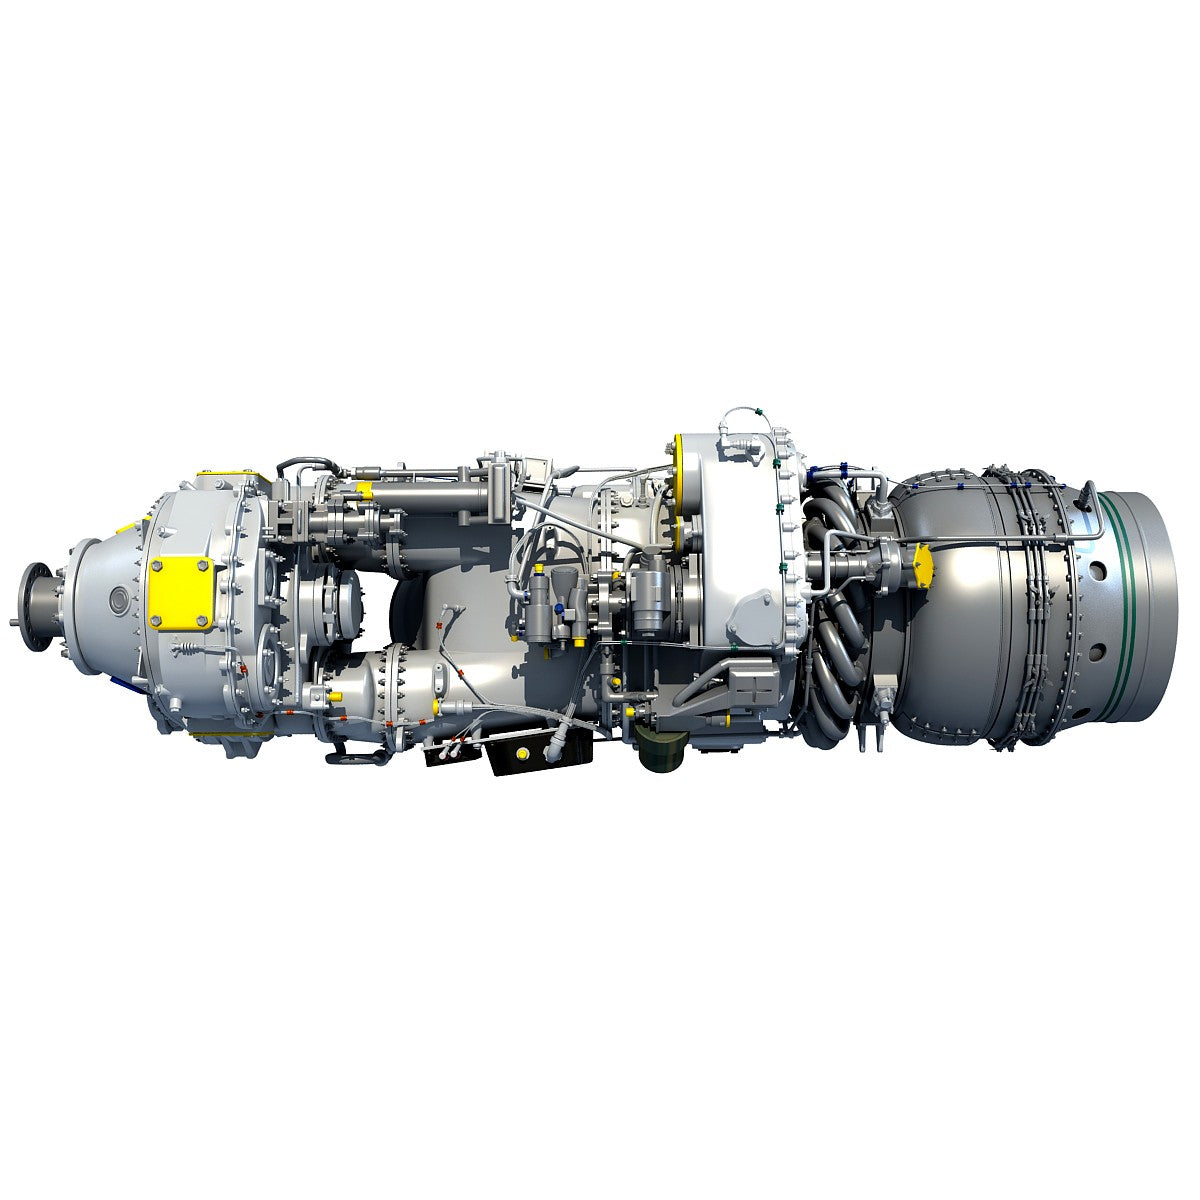 Pratt & Whitney Turboprop 3D Engine Model